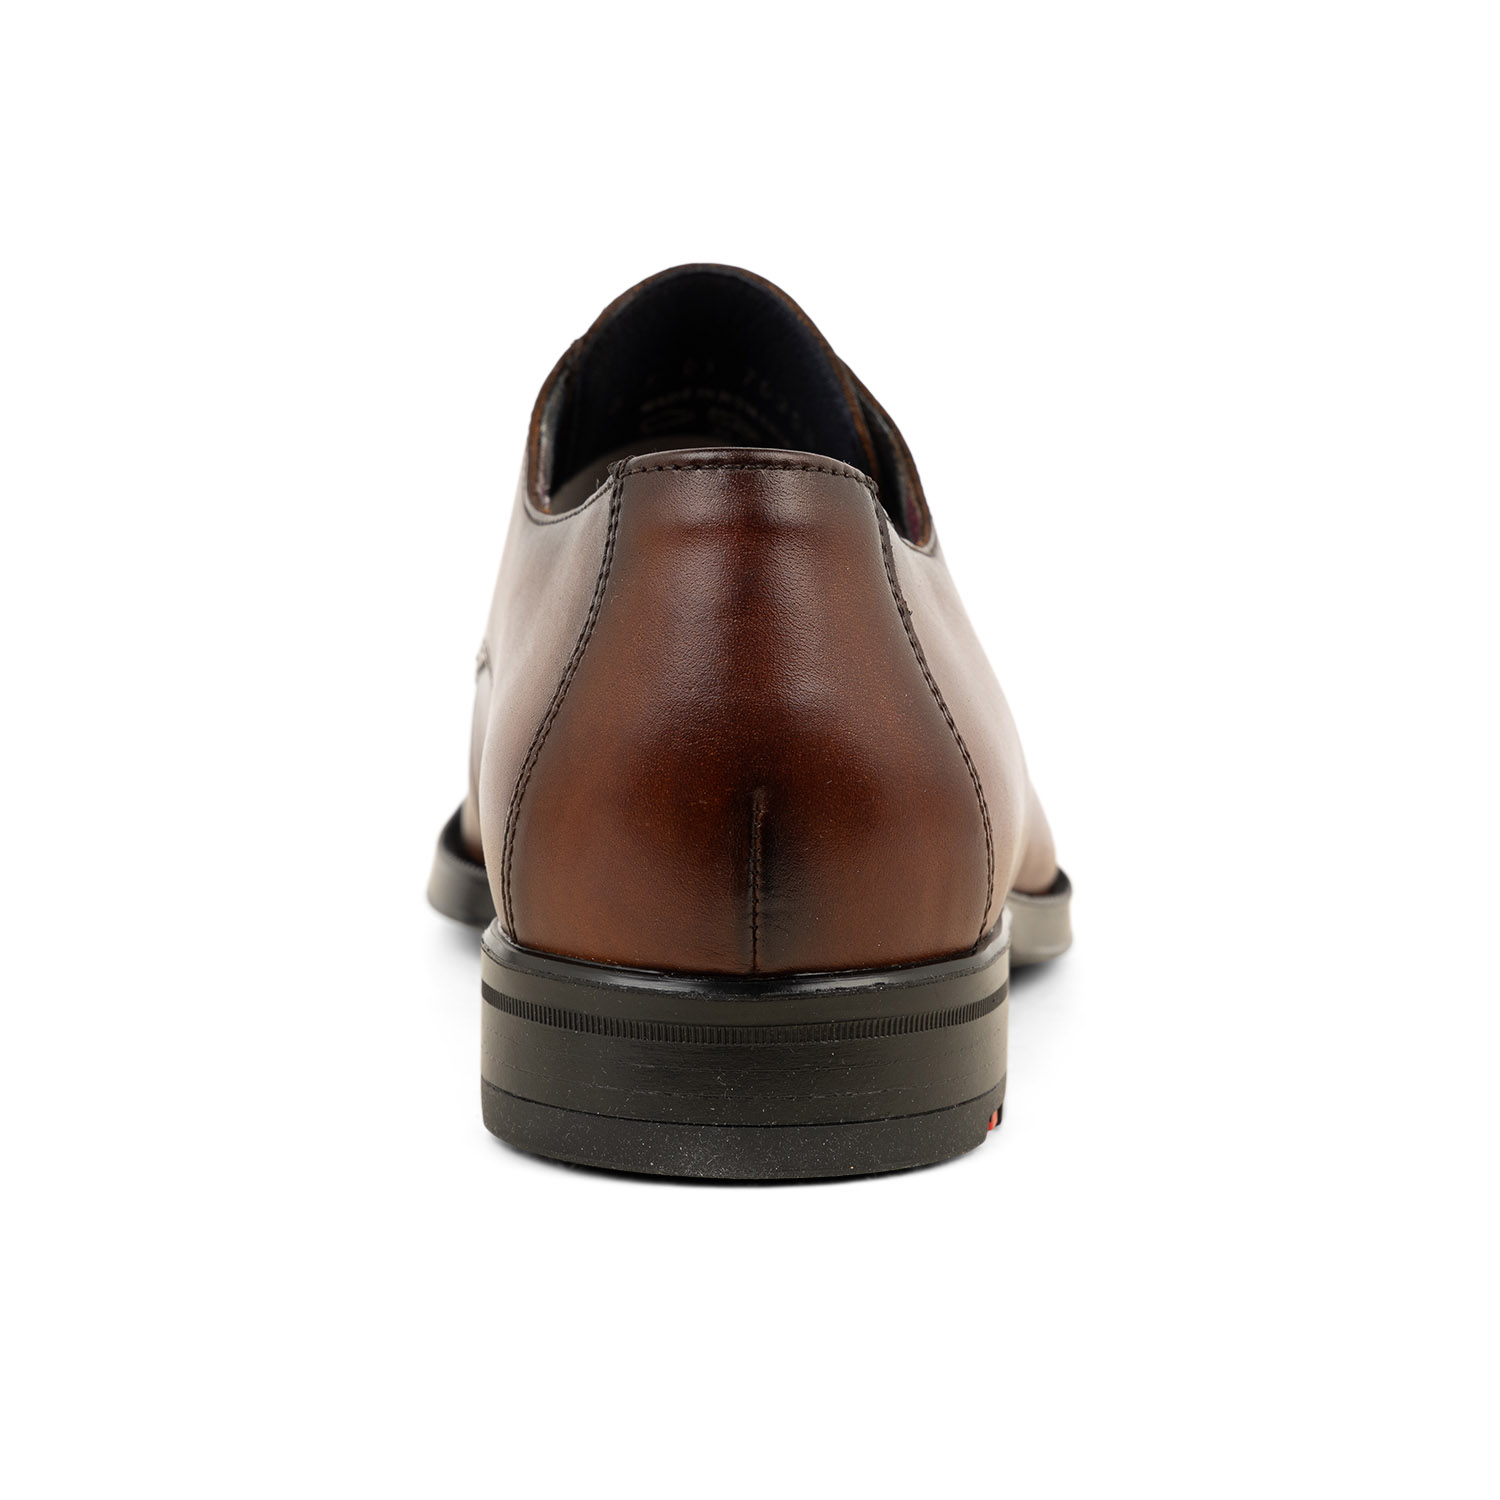 03 - GIDEON - LLOYD - Chaussures à lacets - Cuir